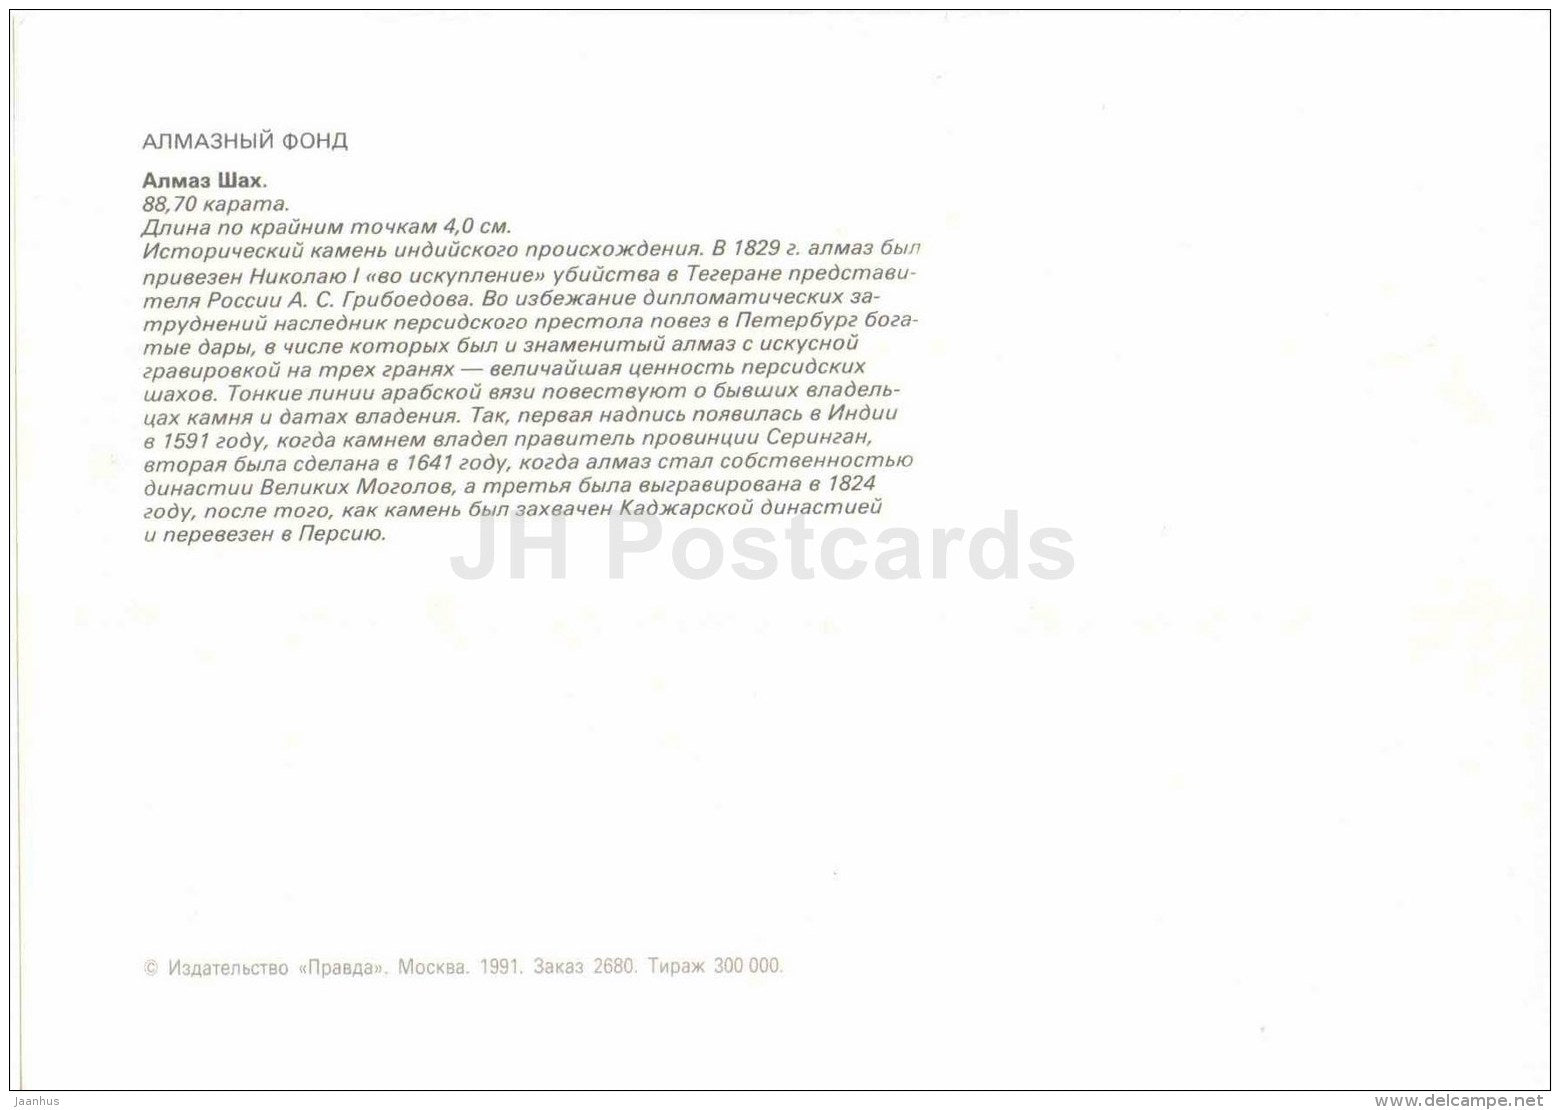 Shah Diamond , 88 carat - arabian - Diamond Fund - Moscow - 1991 - Russia USSR - unused - JH Postcards